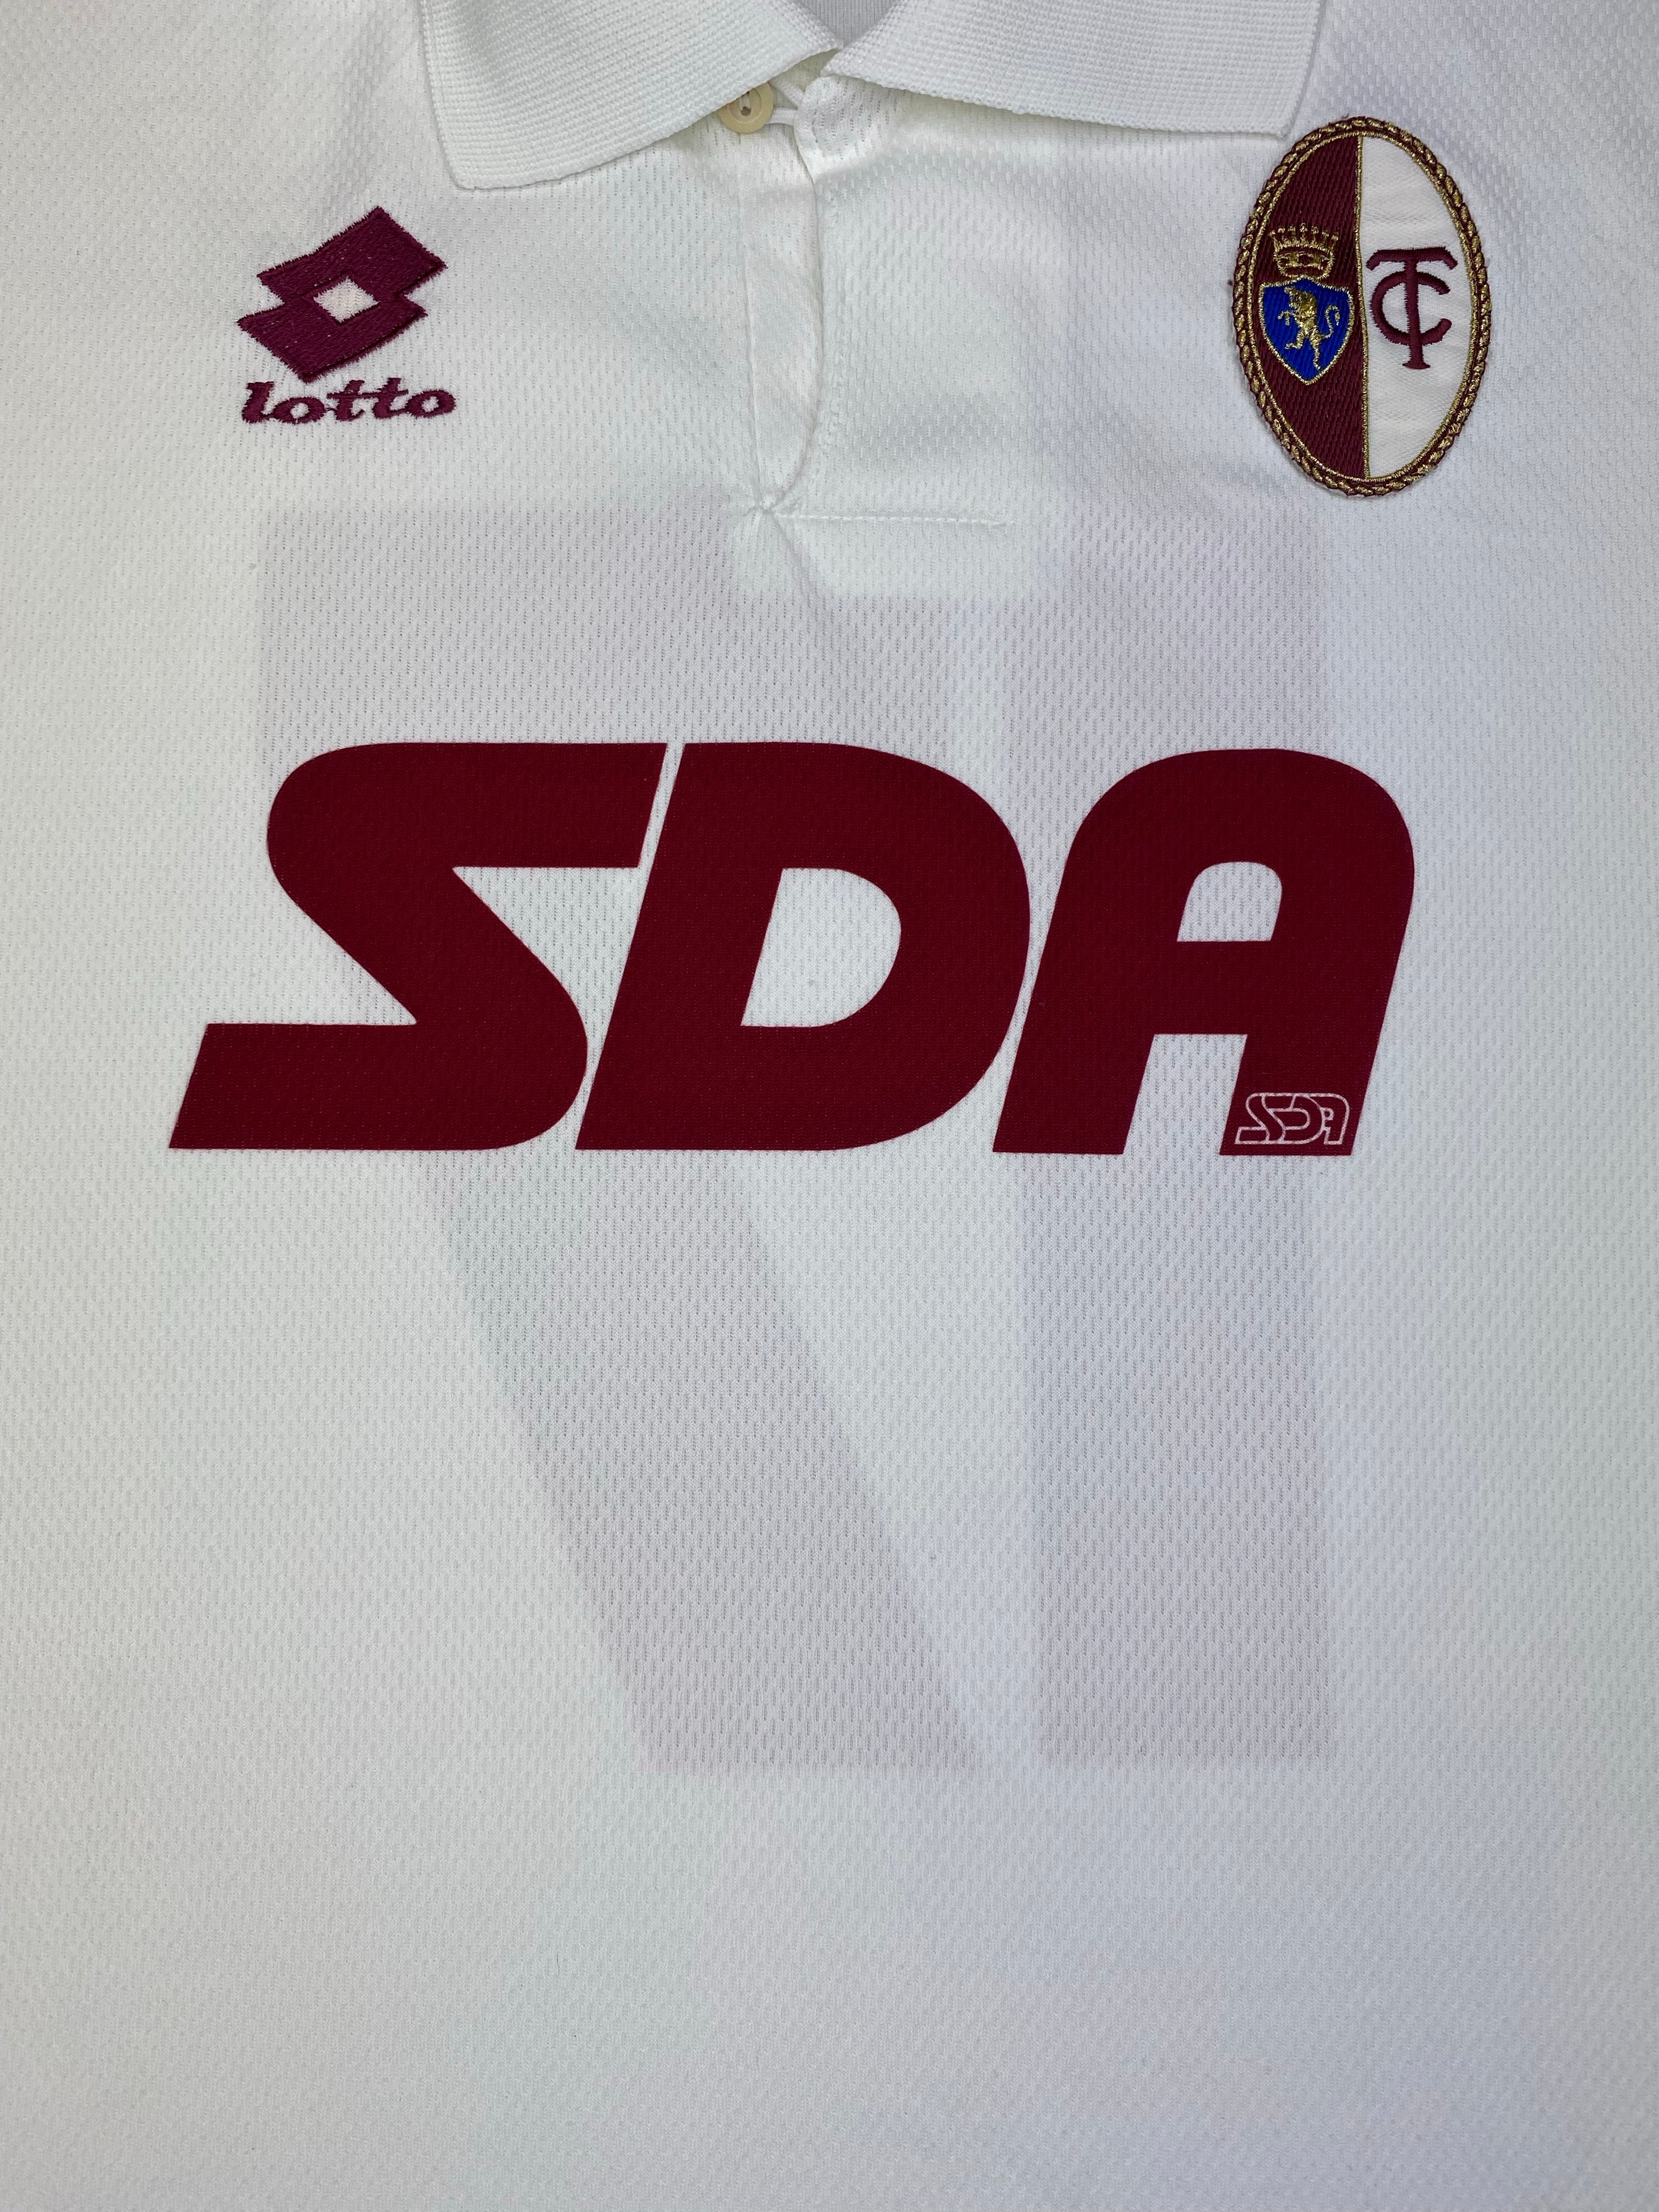 1995/96 Torino Away Shirt #17 (XL) 9/10